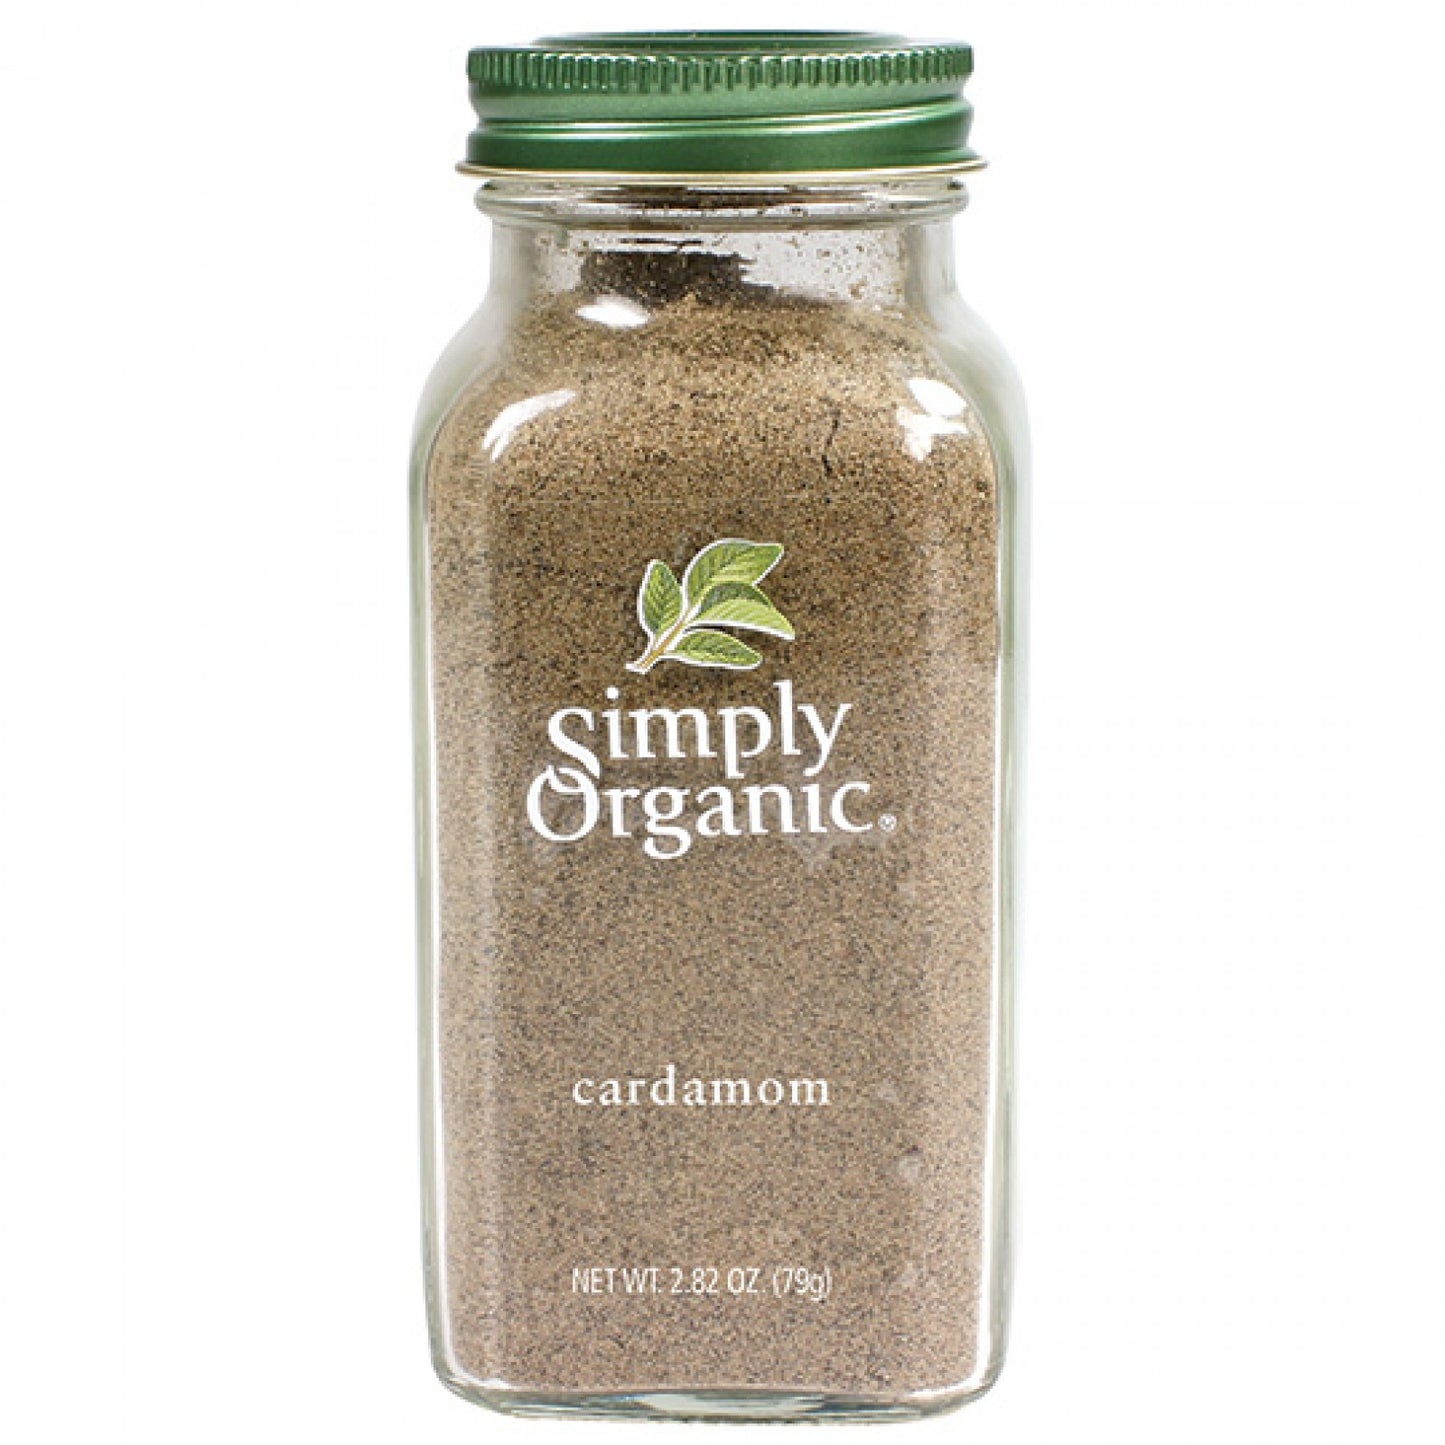 Simply Organic Cardamom 80g Ground (Glass Jar)